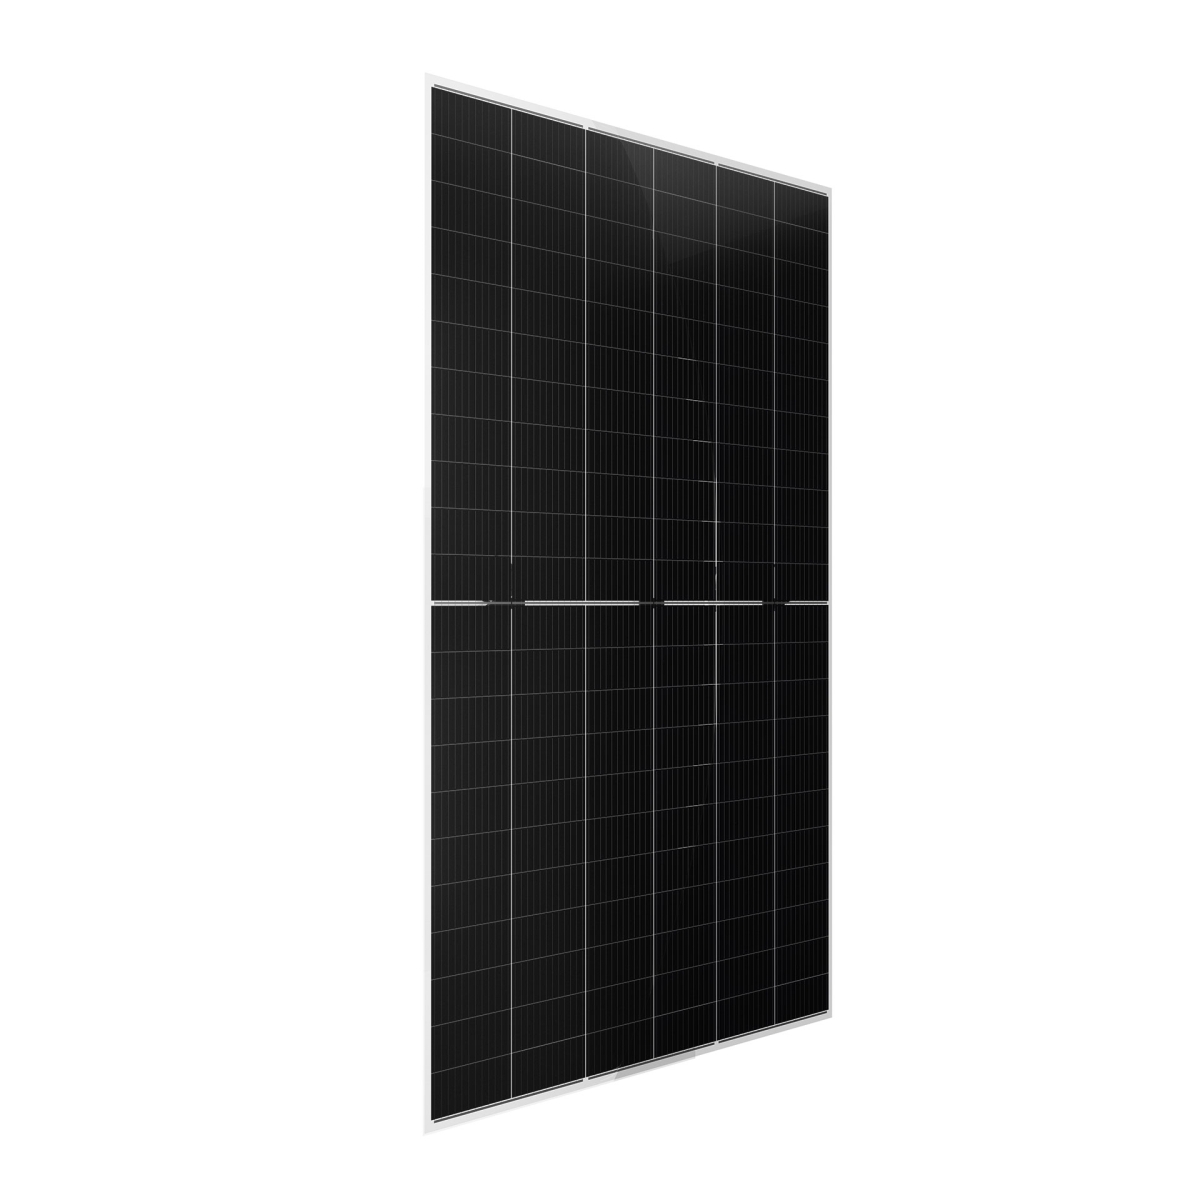 CW Enerji 665Wp M12 132PM Cells Bifacial G2G Half-Cut MB Solar Panel